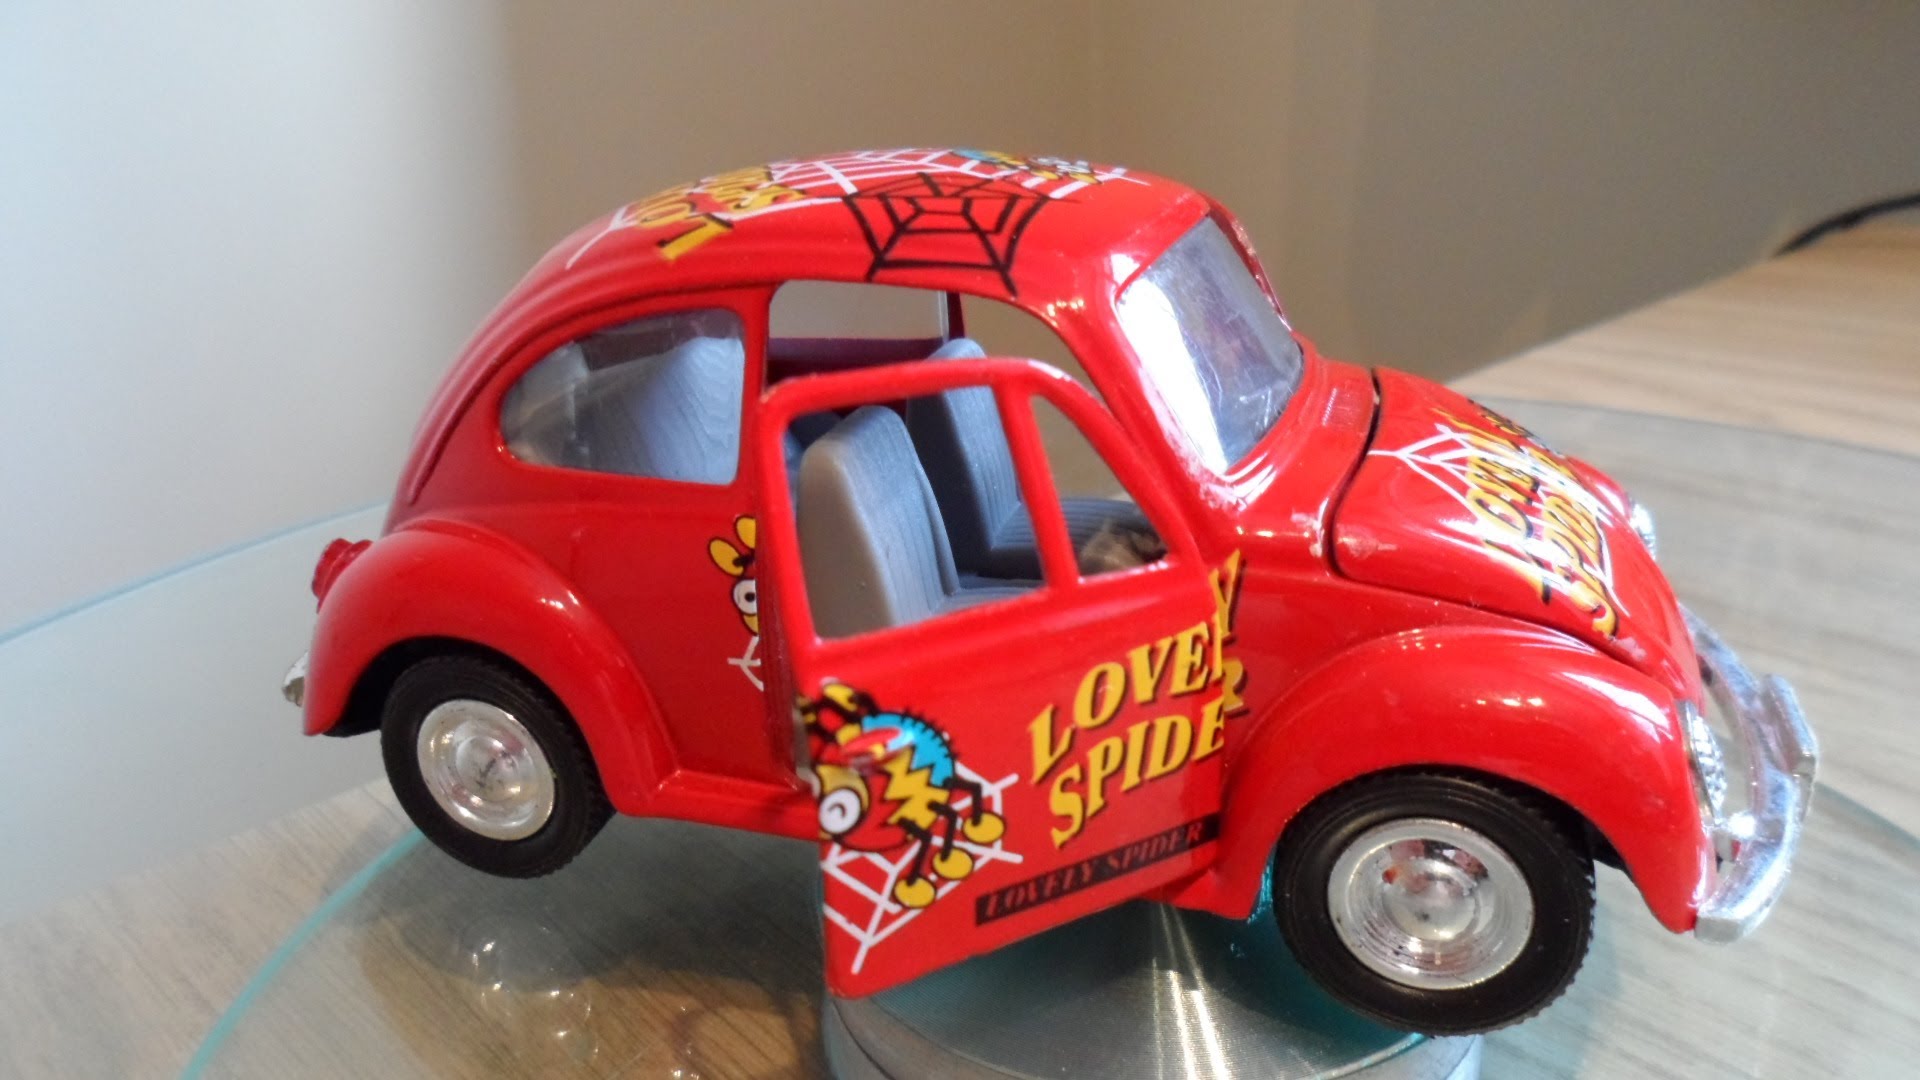 RED TOY CAR VW VOLKSWAGEN BEETLE LOVELY SPIDER DESIGN FRICTION ...